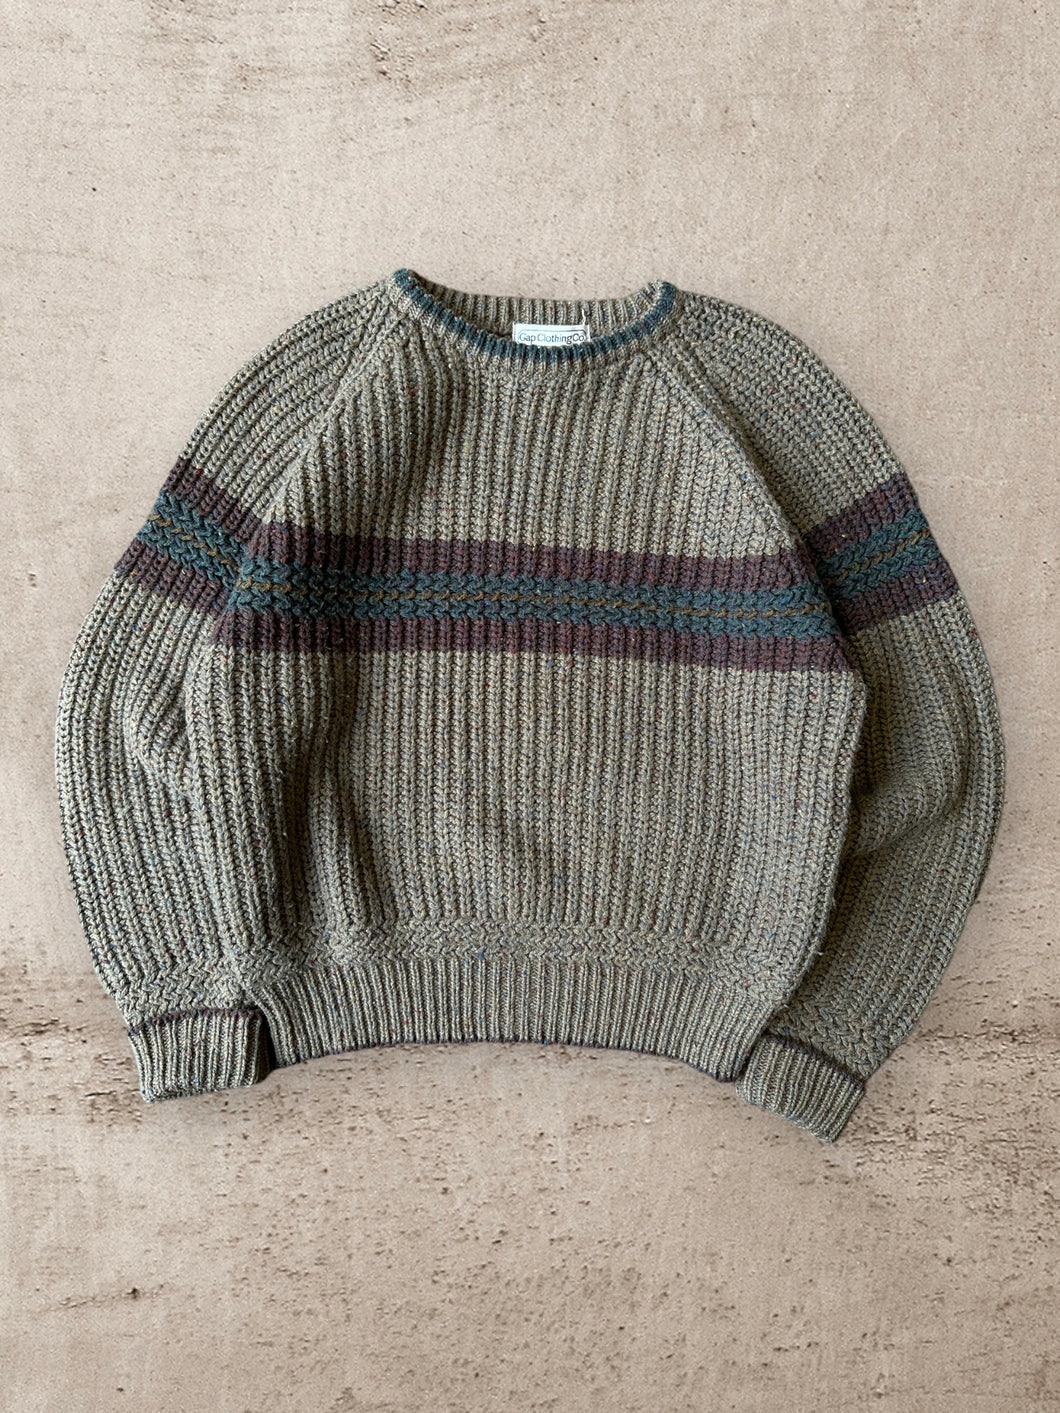 Vintage Gap Striped Green Knit Sweater - Large